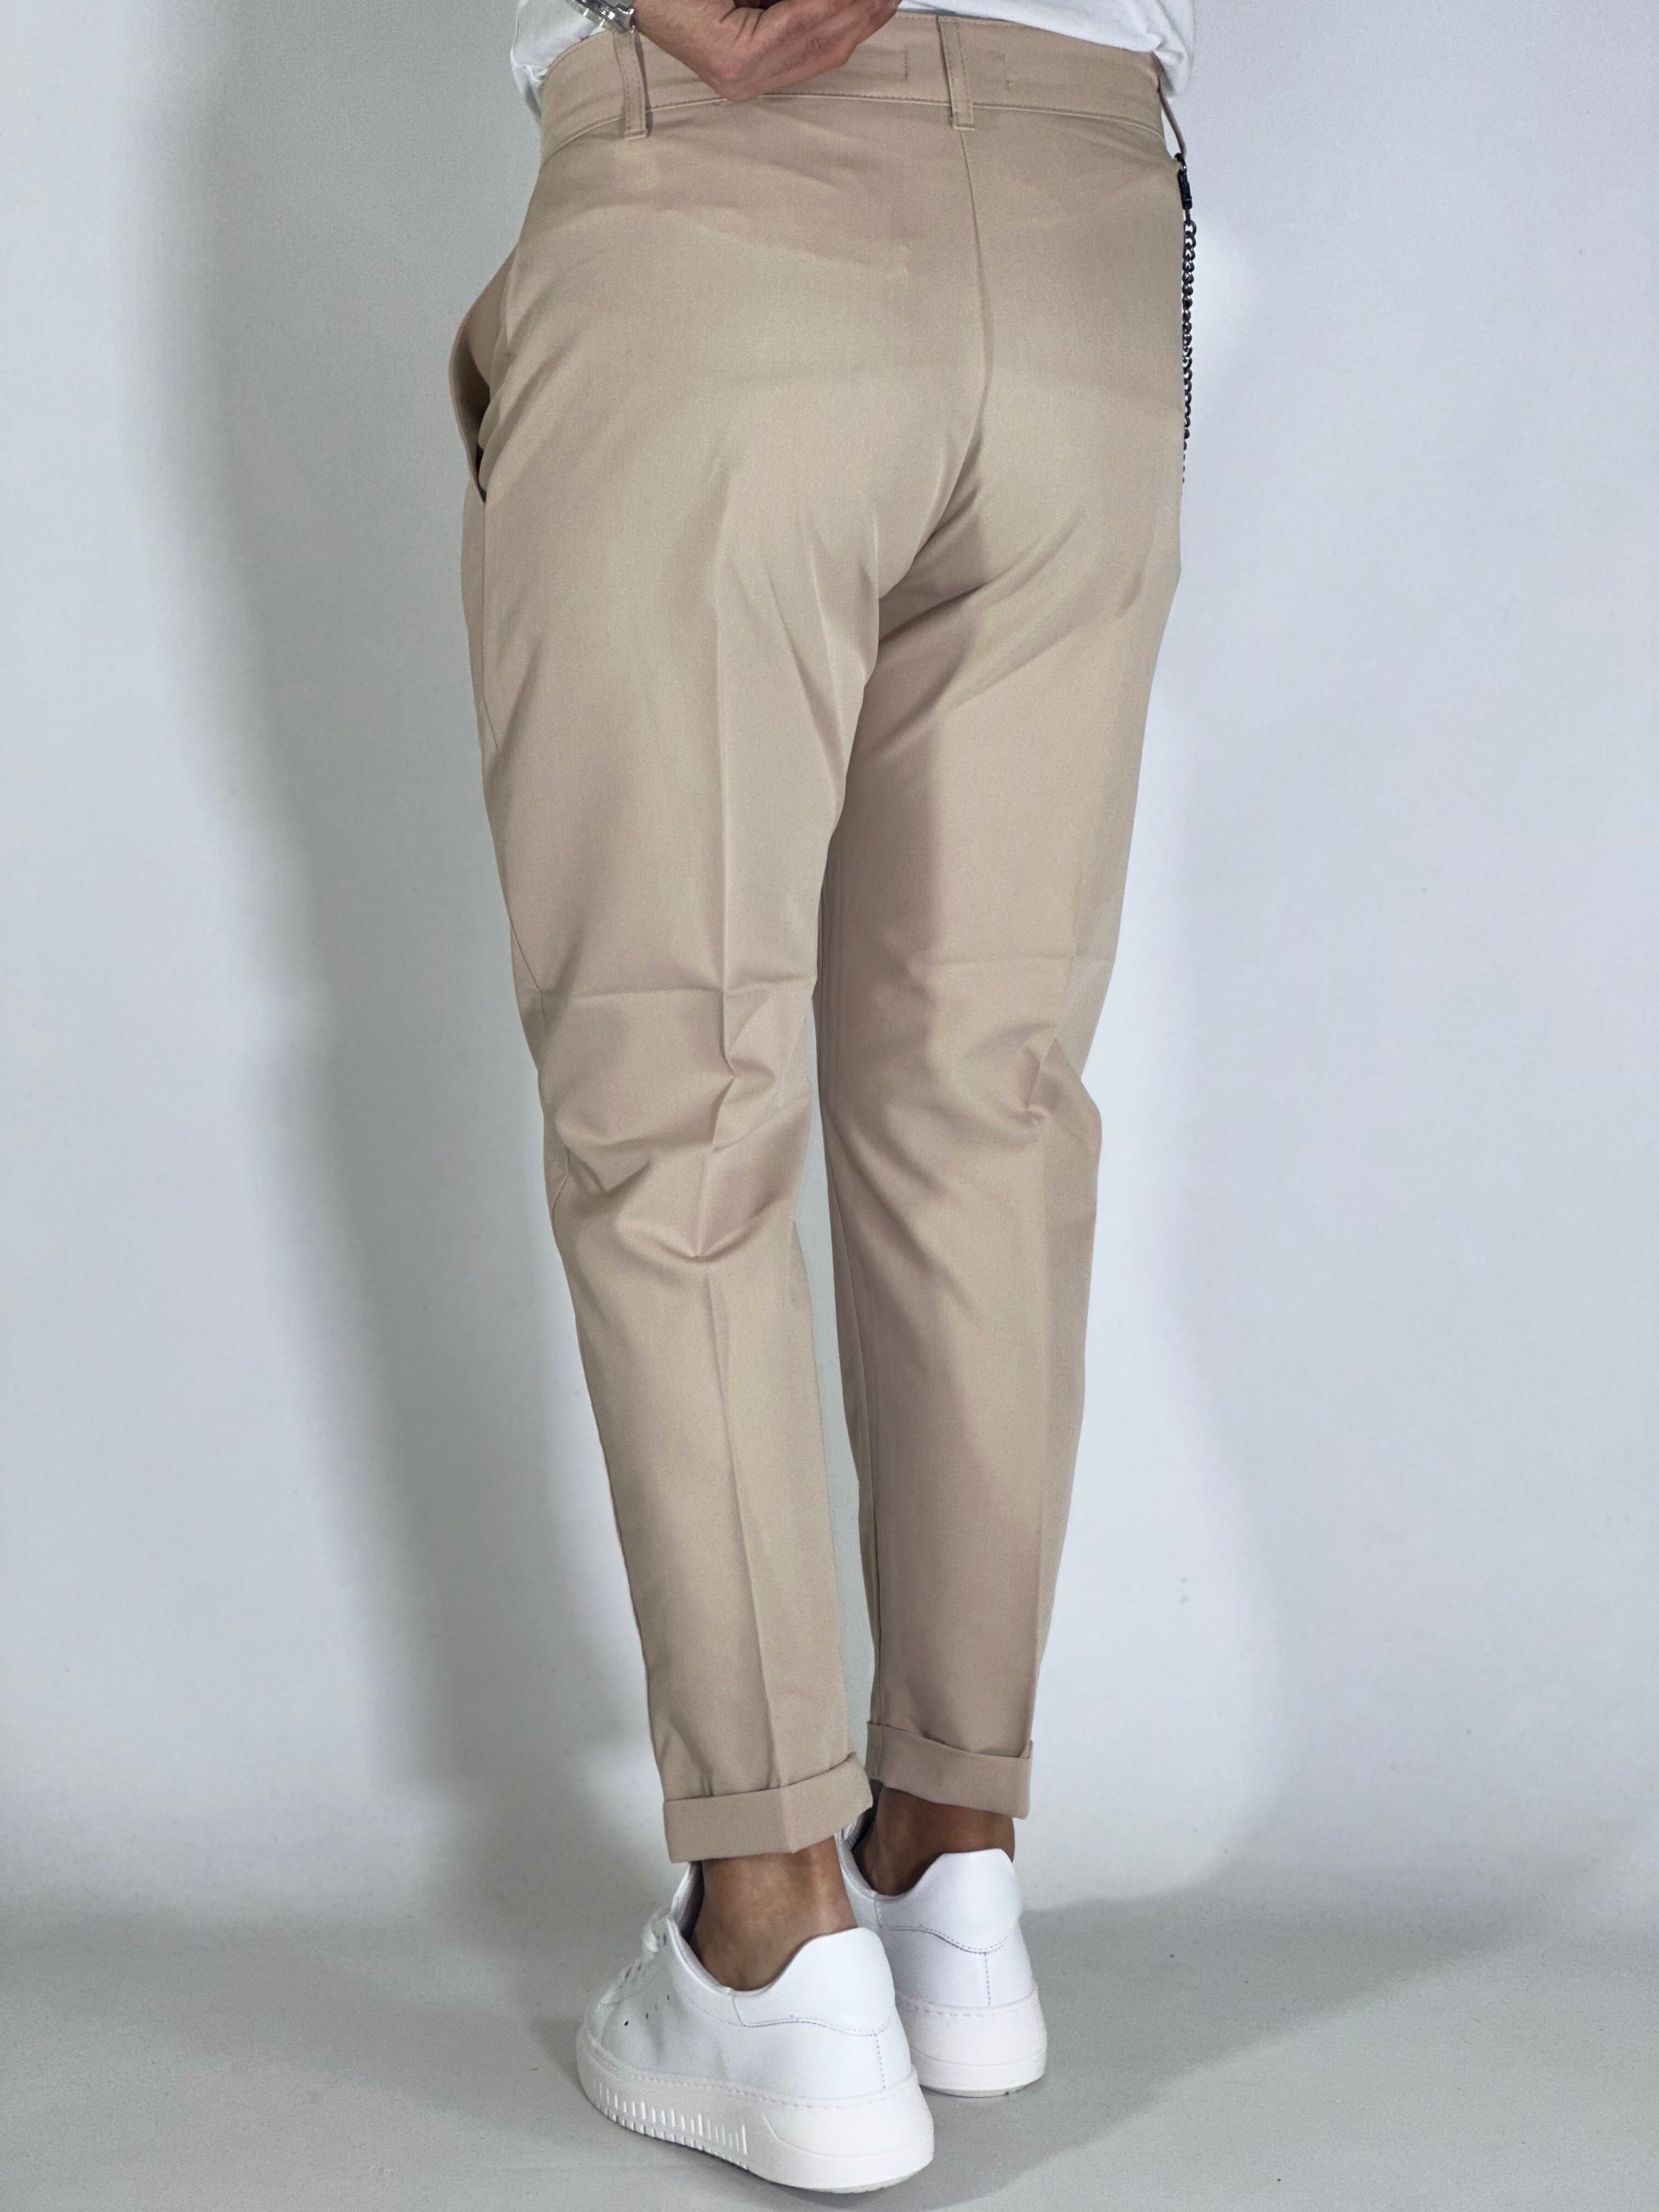 Pantalone elegant beige chiaro AG95